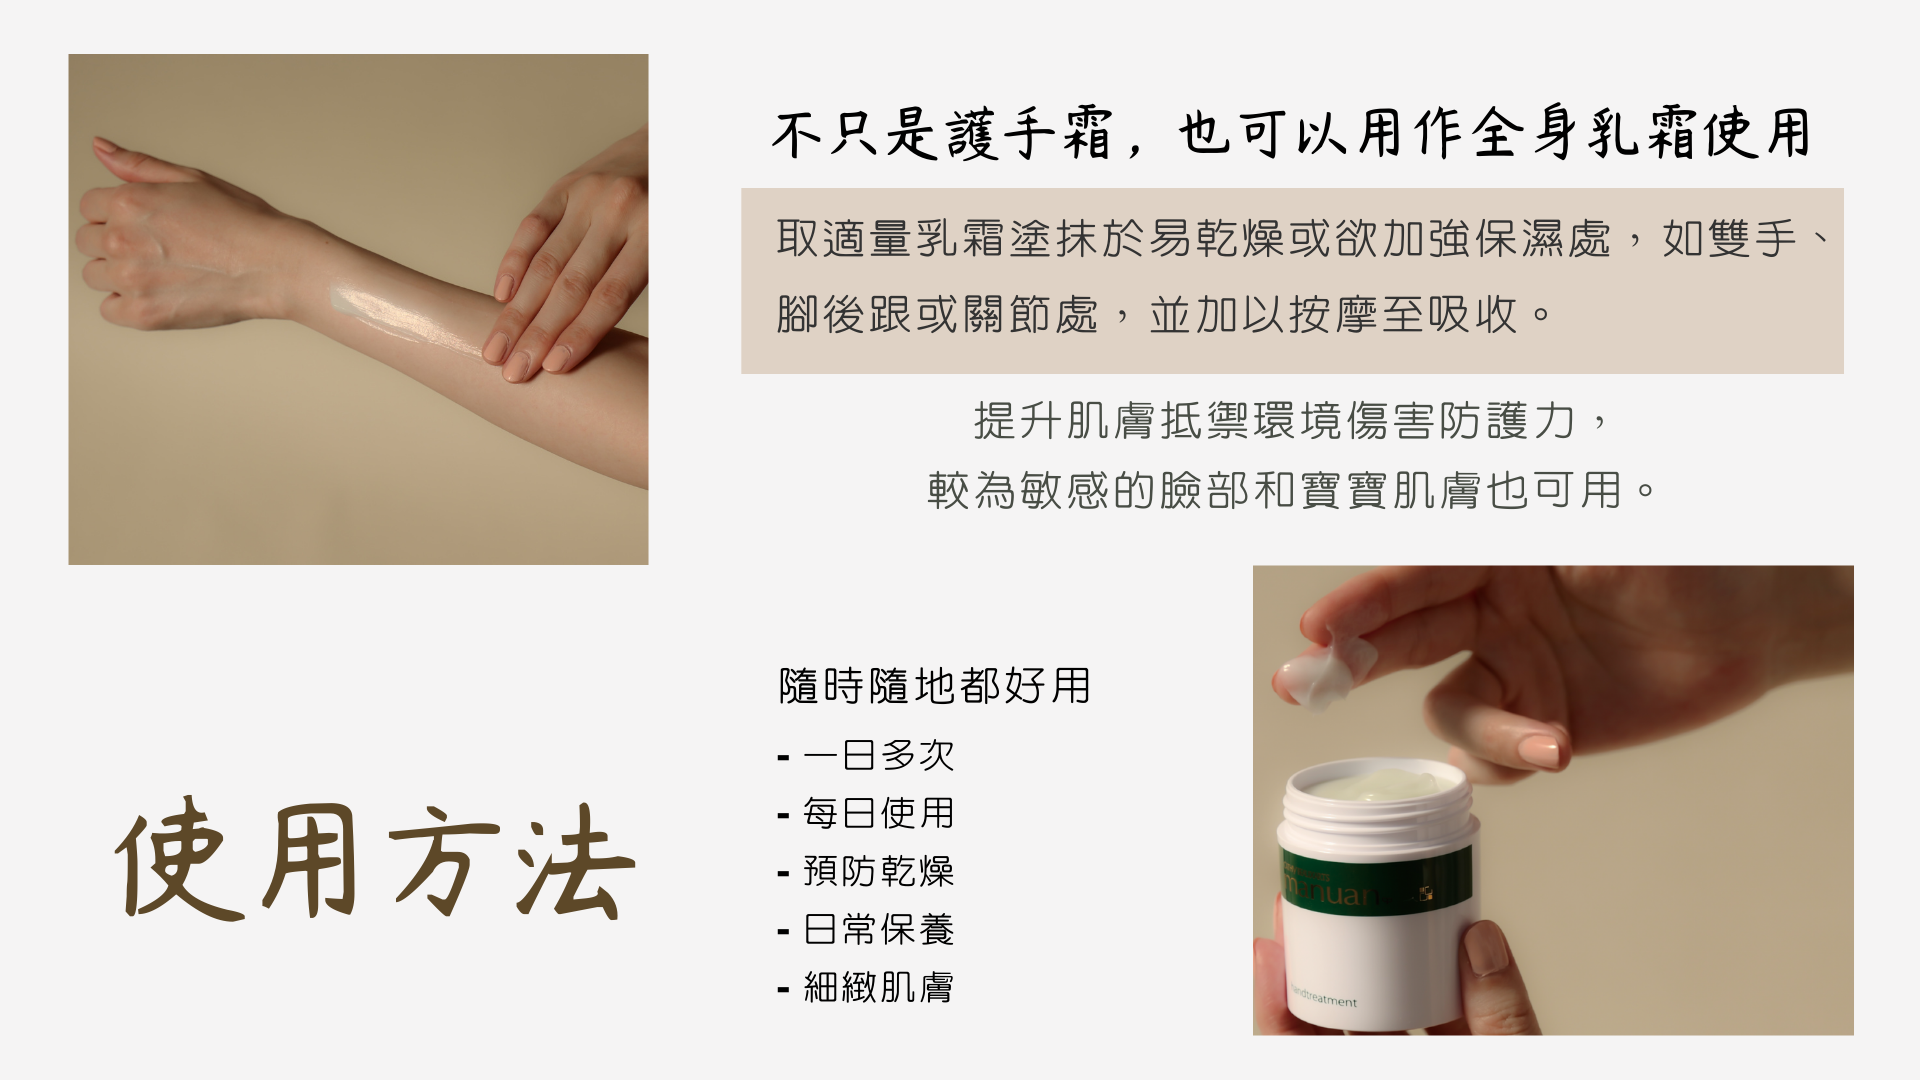 06-manuan 全家人的護膚品,護手霜-使用方法